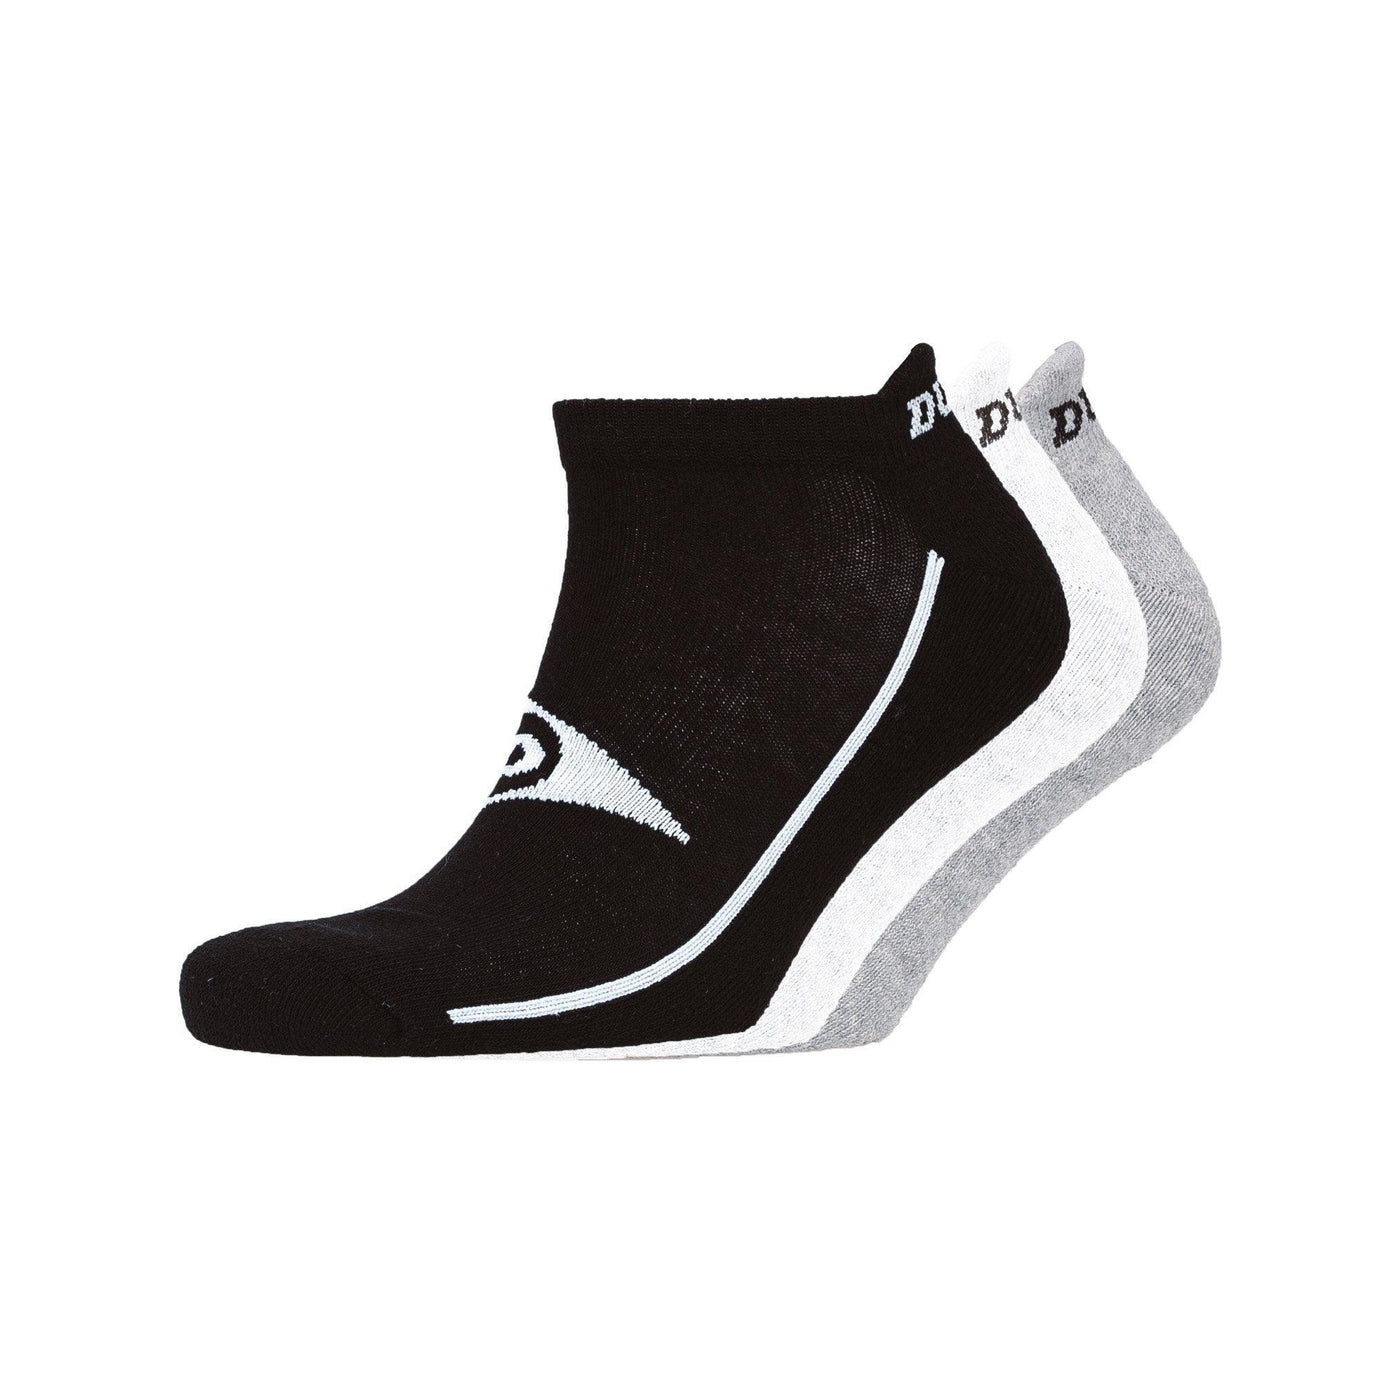 Leighwood Trainer Socks 3Pk - Black/white/grey Accessories